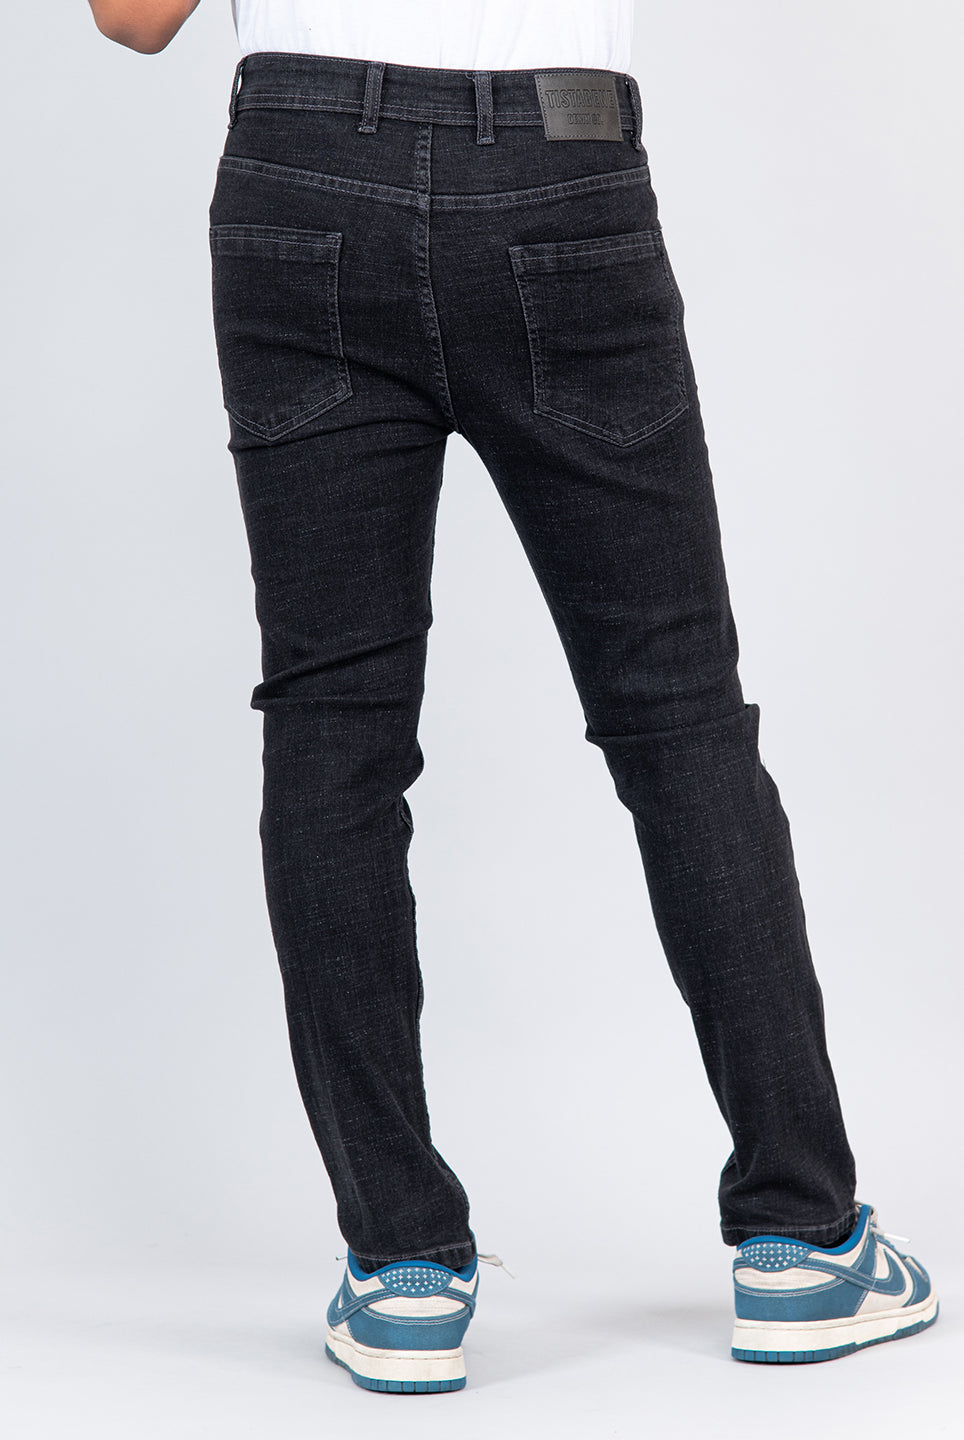 black jeans for men